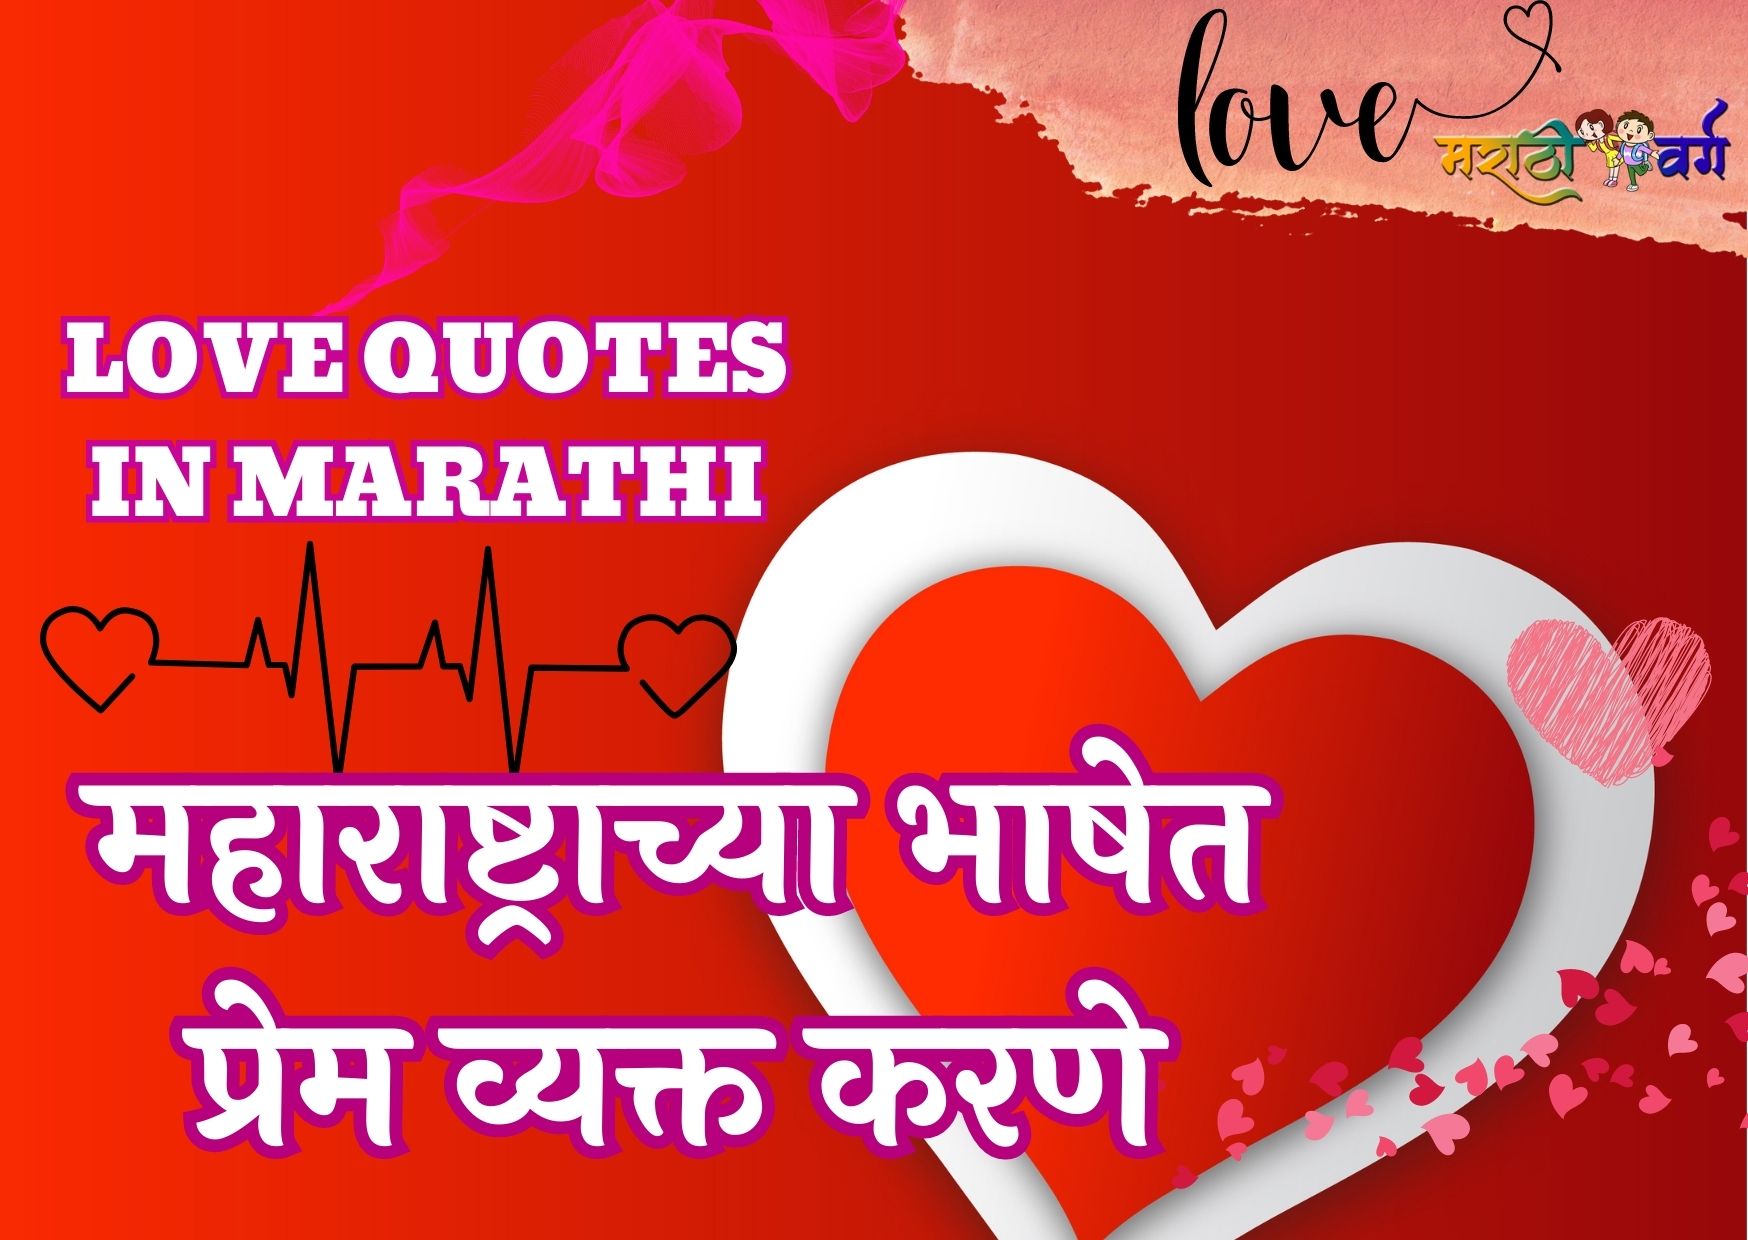 महाराष्ट्राच्या भाषेत प्रेम व्यक्त करणे|100 Love Quotes in Marathi: Expressing Love in the Language of Maharashtra